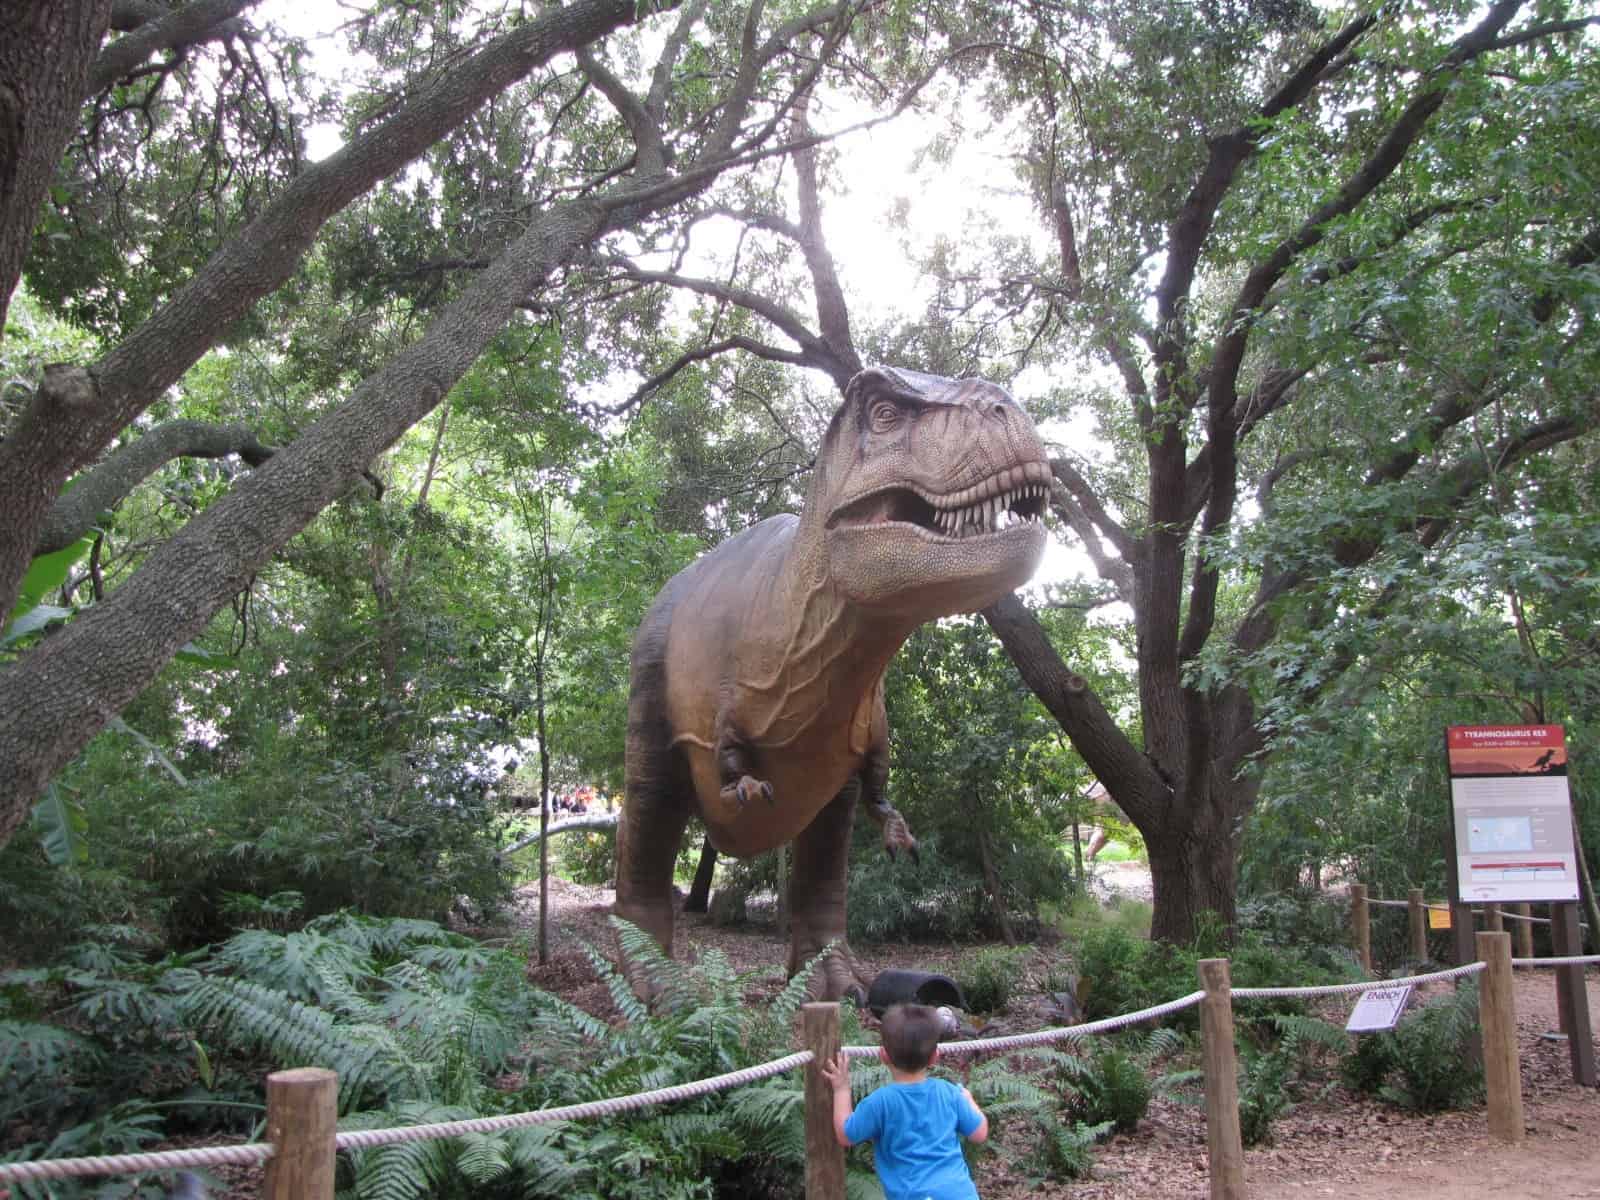 Dinosaurs at Houston Zoo in Houston TX